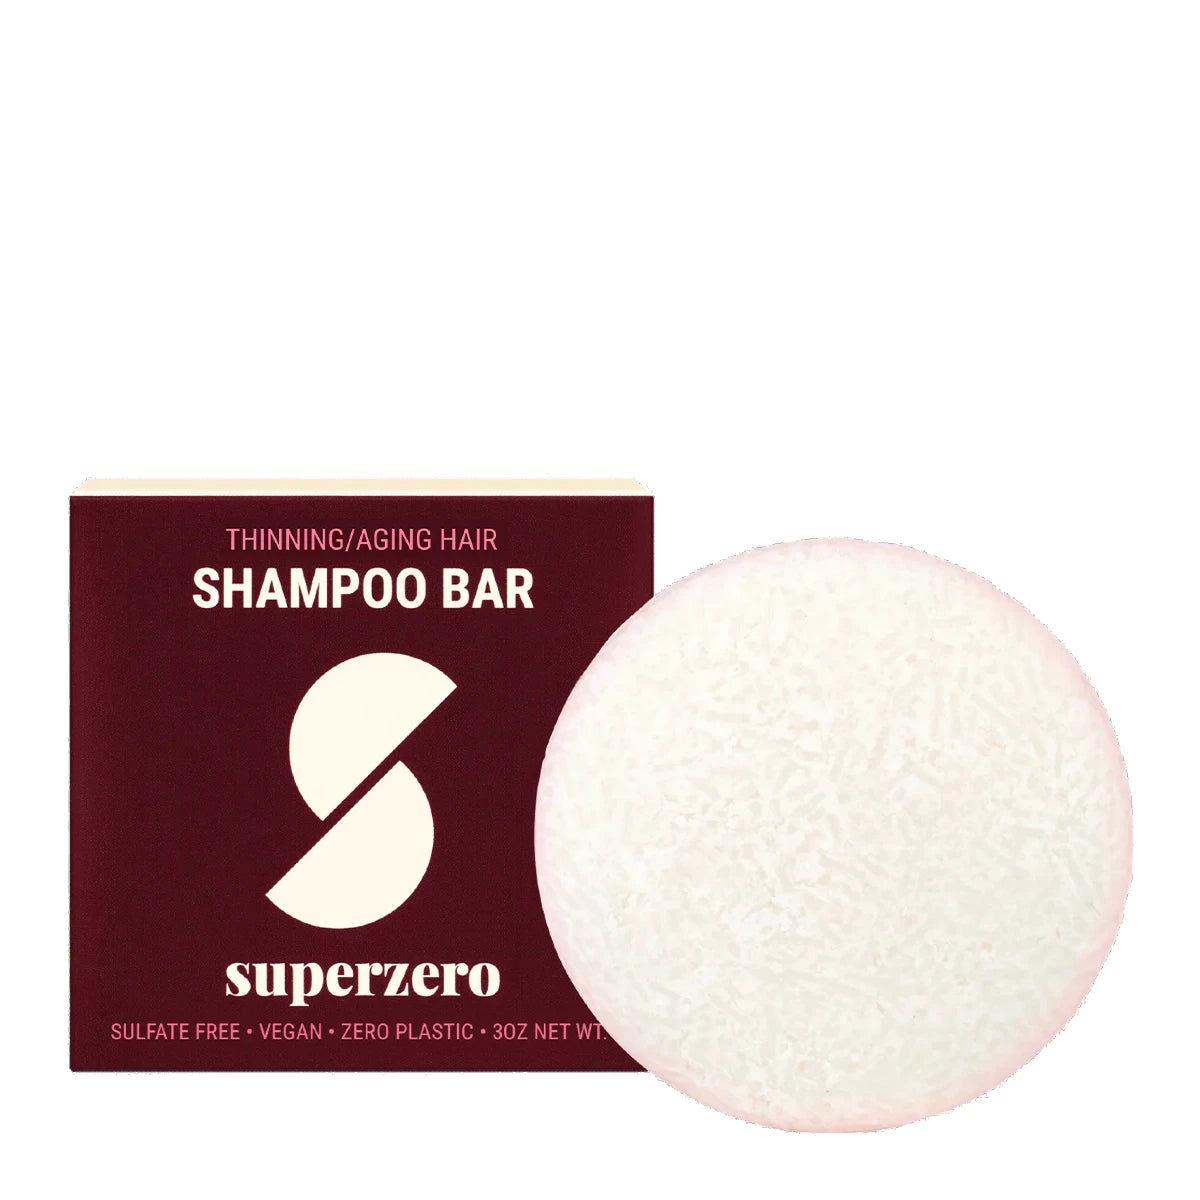 Superzero Shampoo Bar for Thinning / Aging Hair 85 g